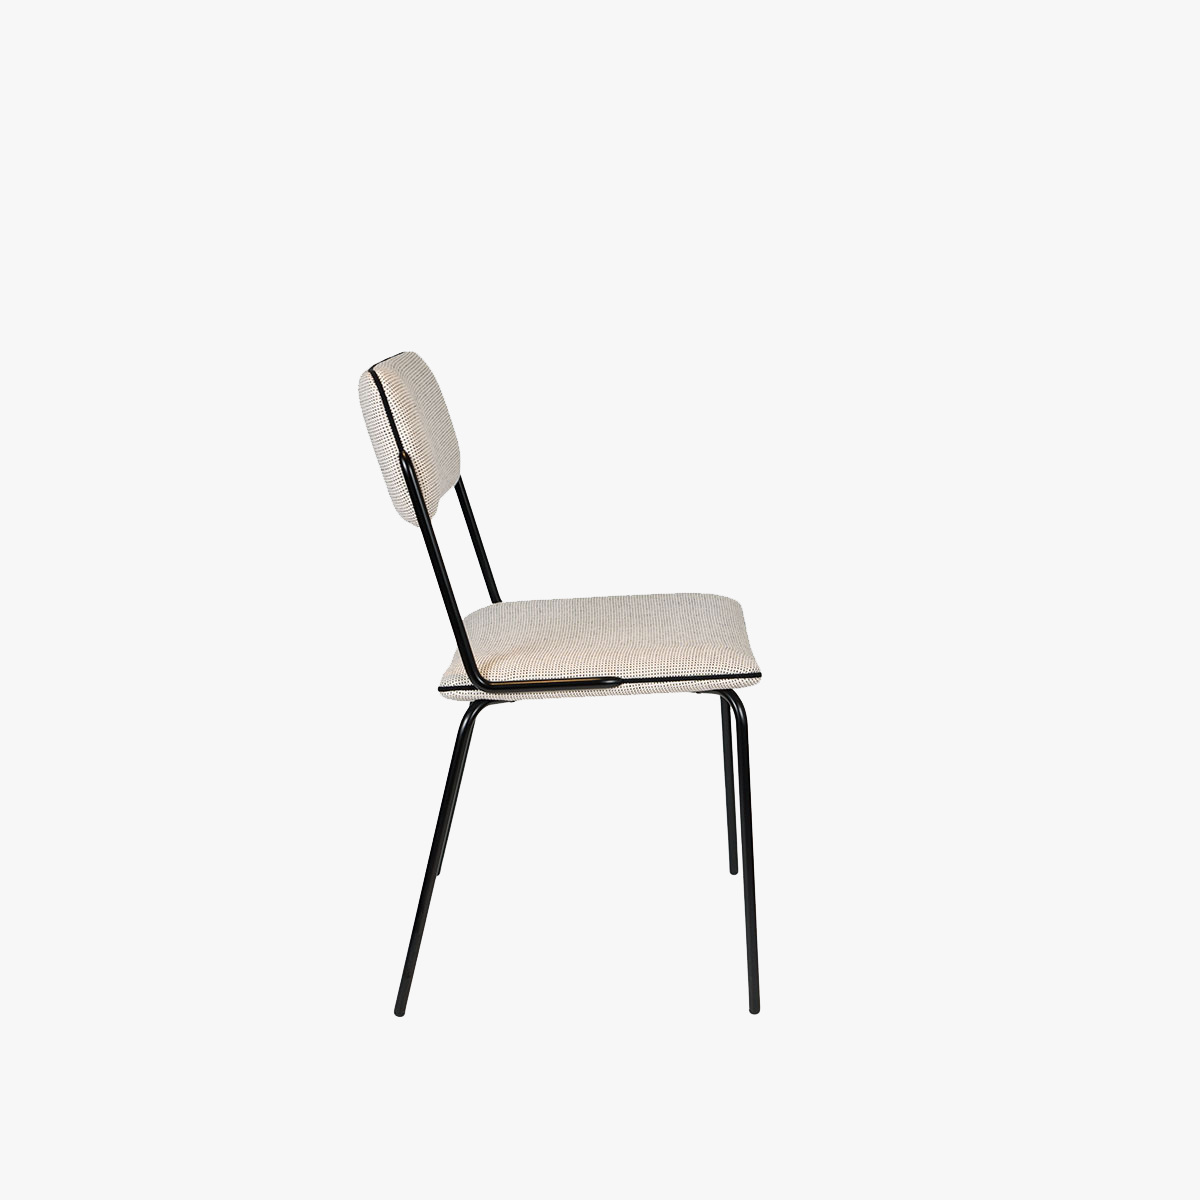 Chair Double Jeu, Dandy - H85 x W51 x D43 cm - Dandy tissue / Steel - image 1